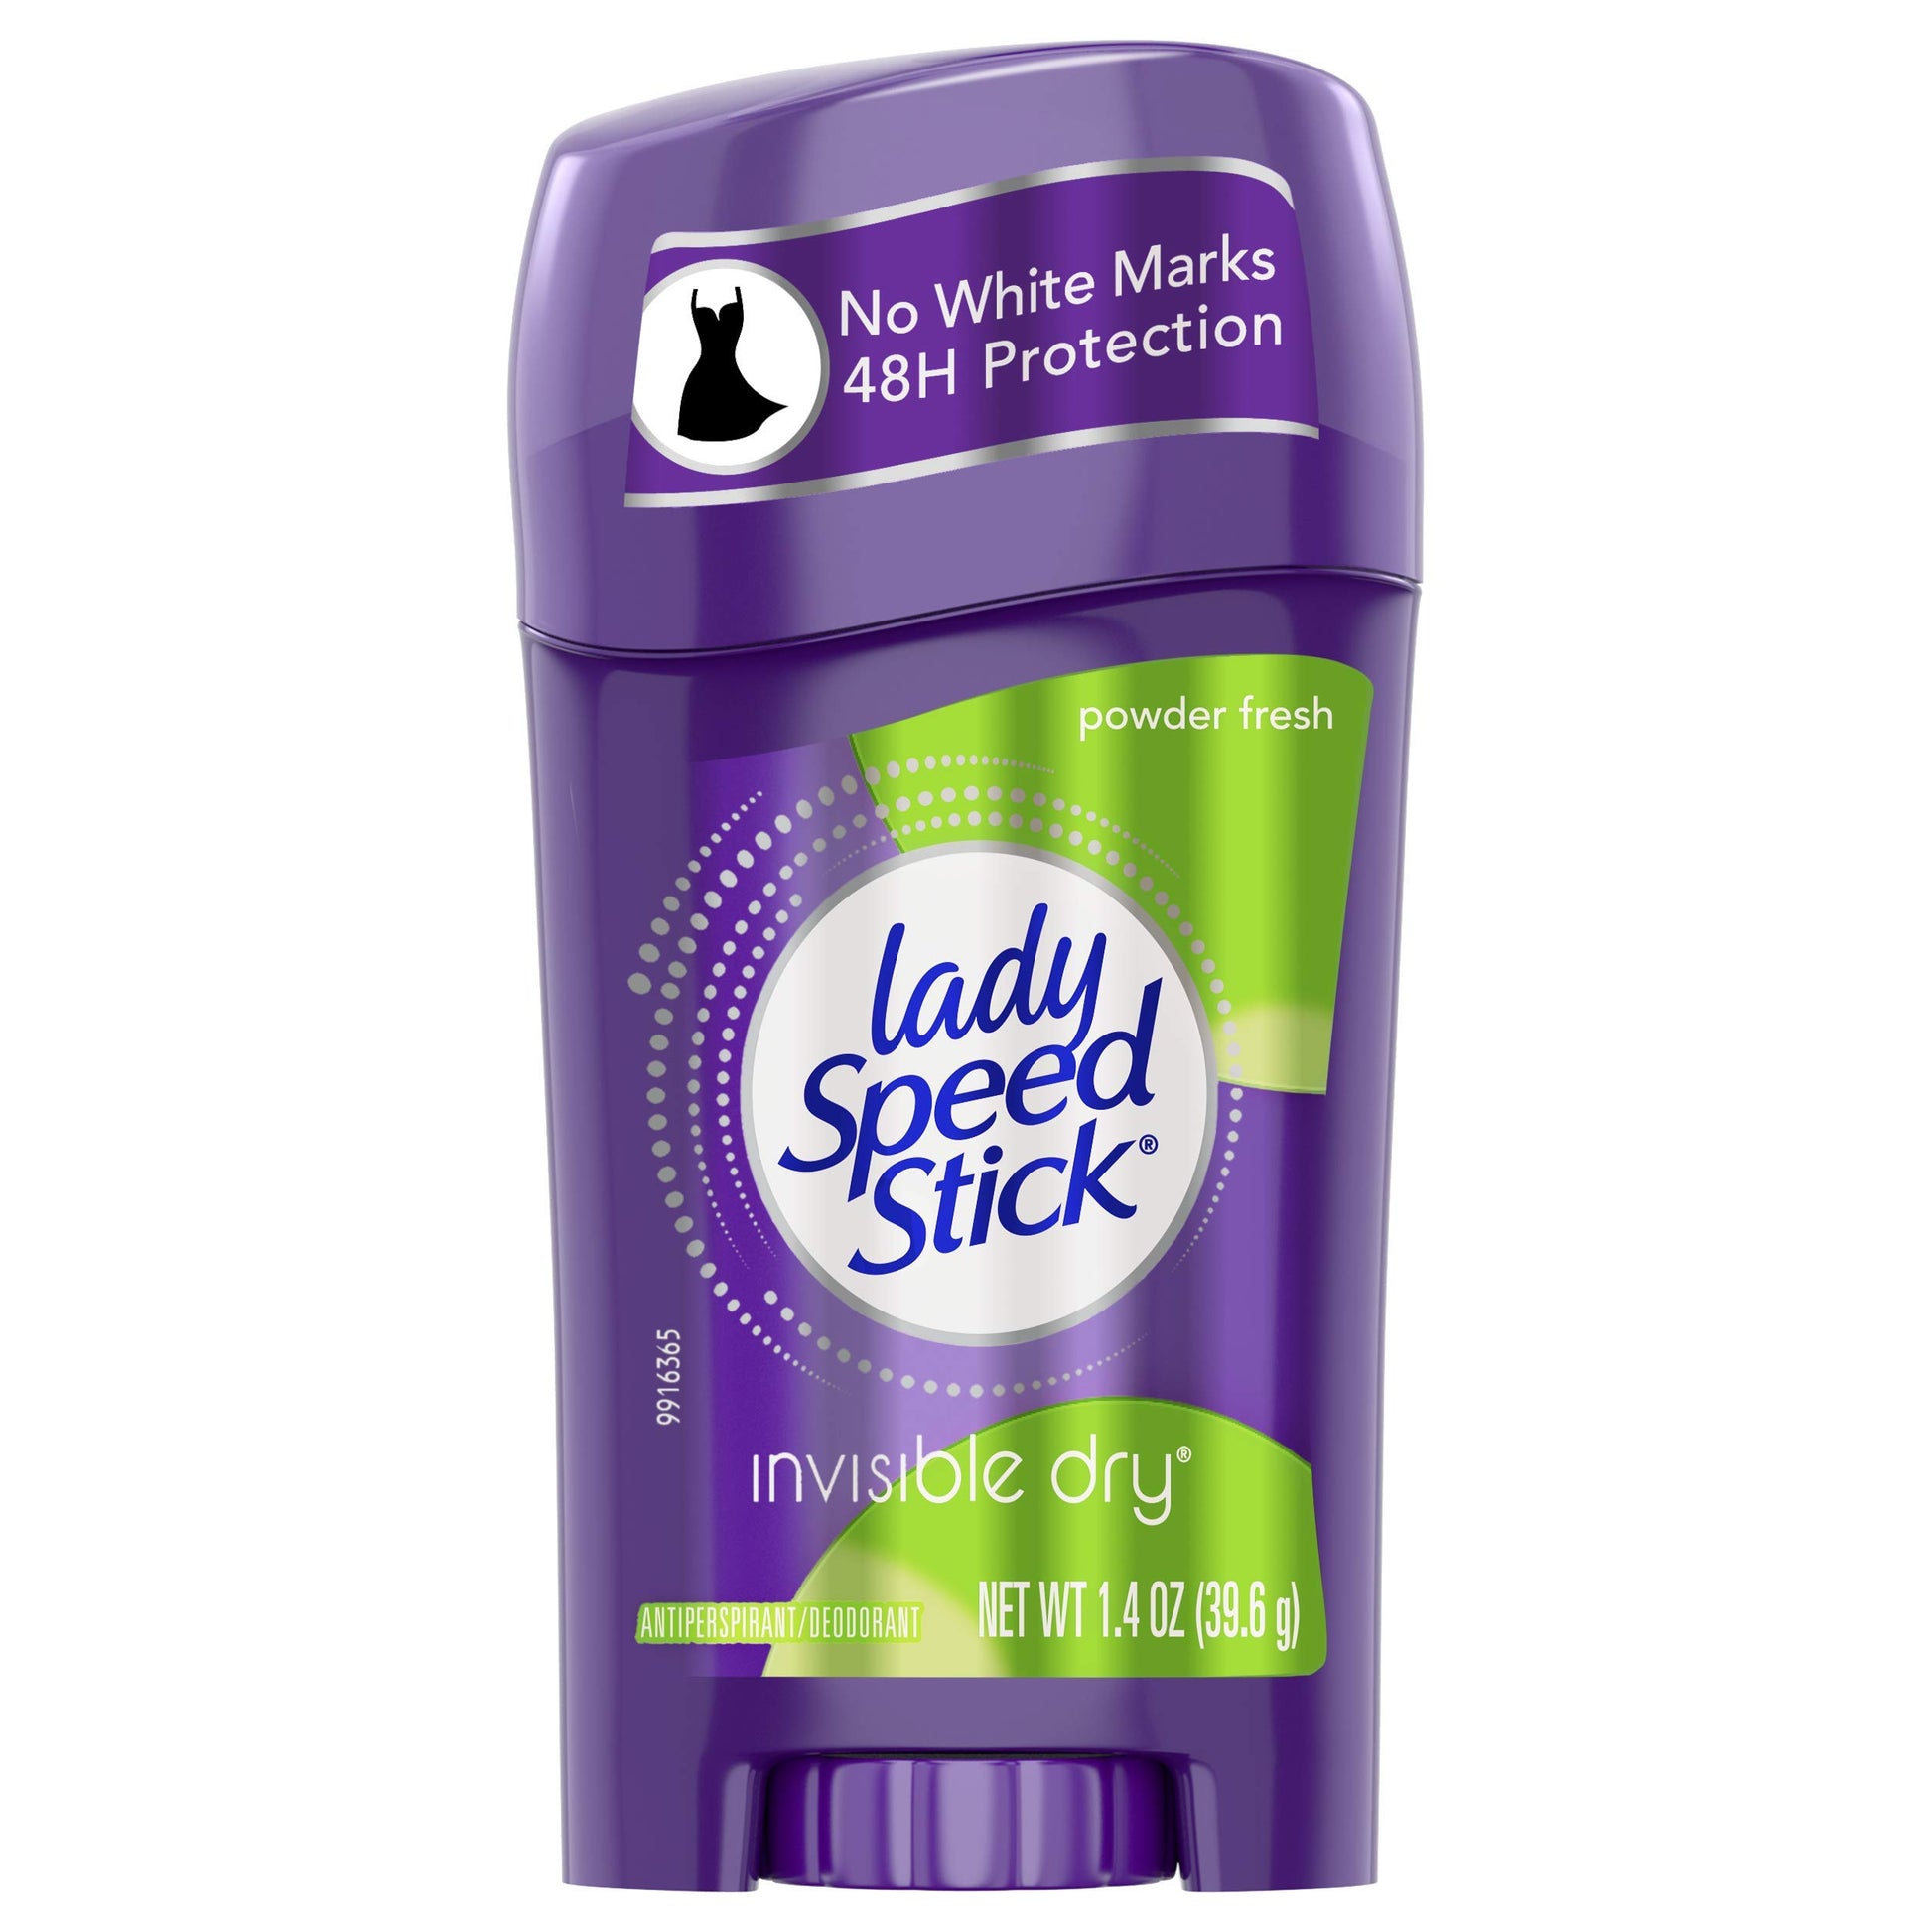 Lady Speed Stick Invisible Dry Antiperspirant/Deodorant Powder Fresh 1.4oz